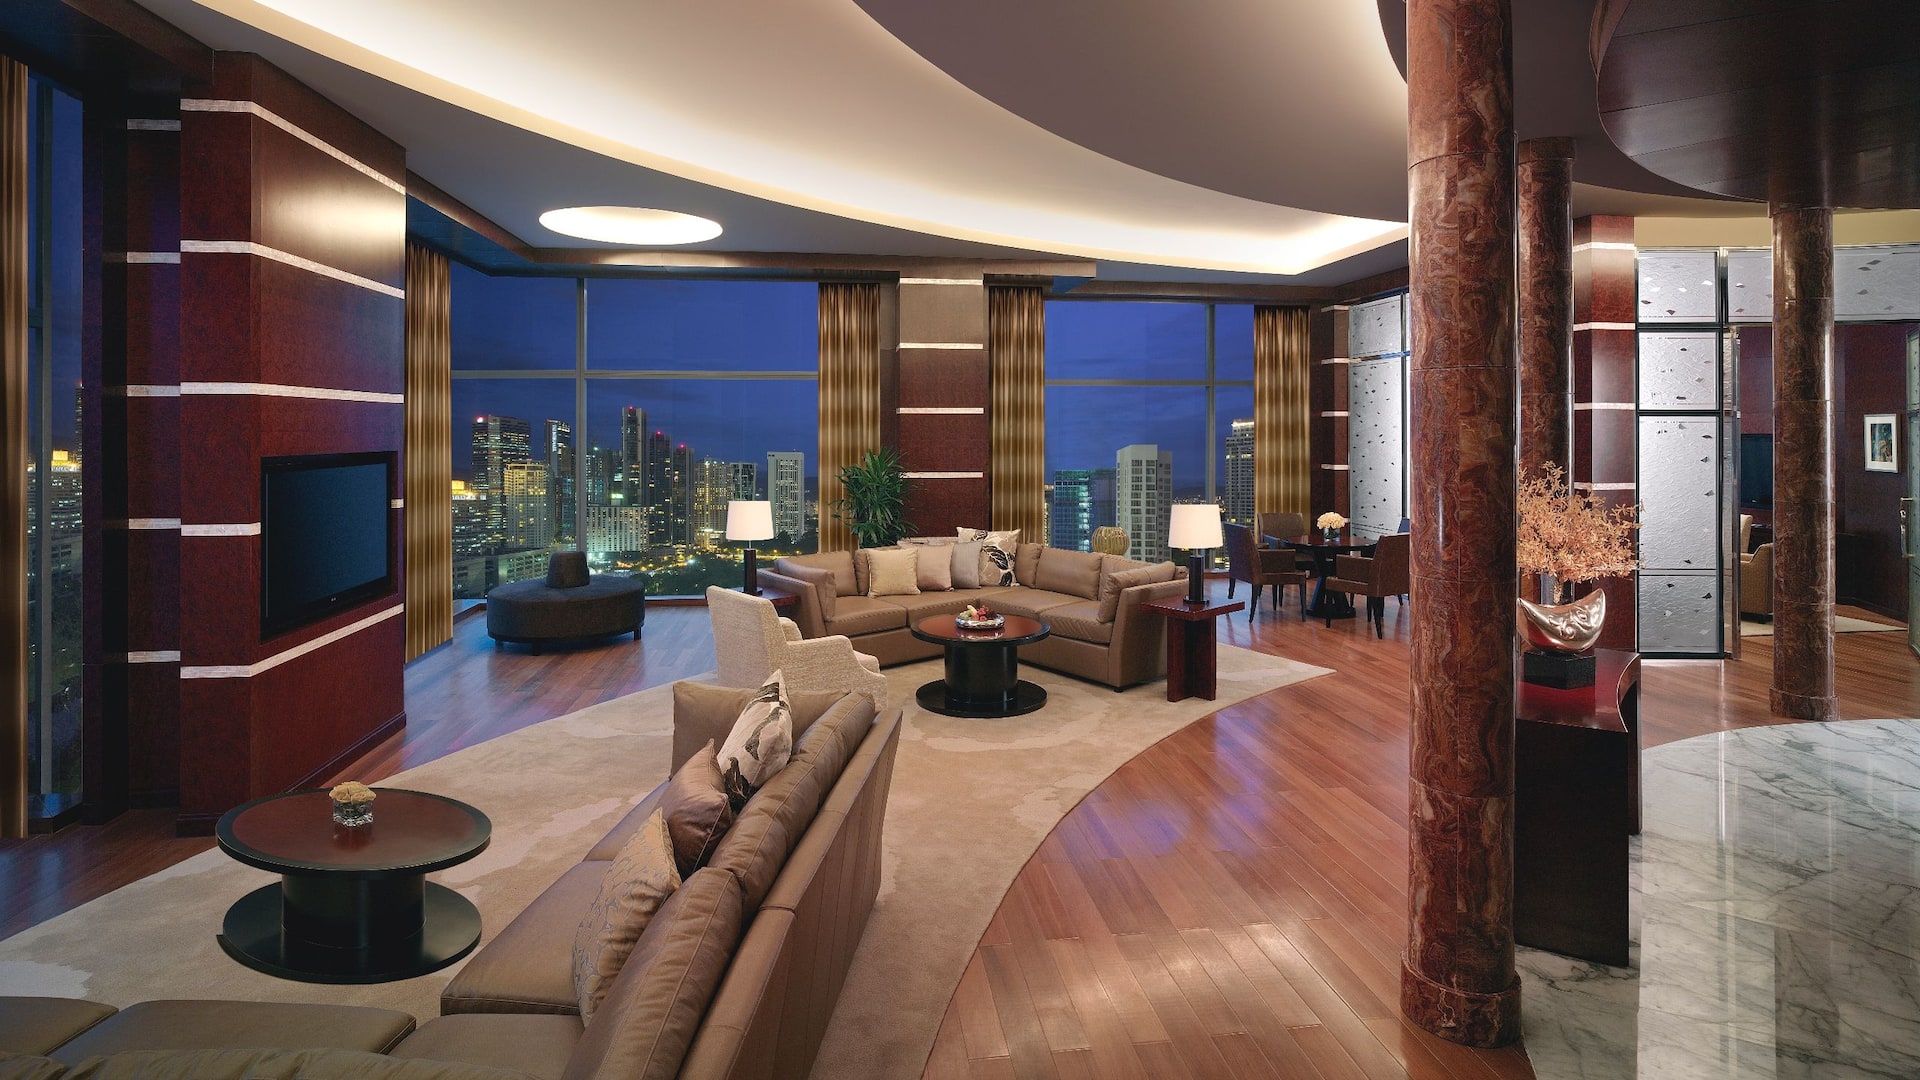 Presidential suite at Grand Hyatt, 5 star hotel near twin tower Kuala Lumpur